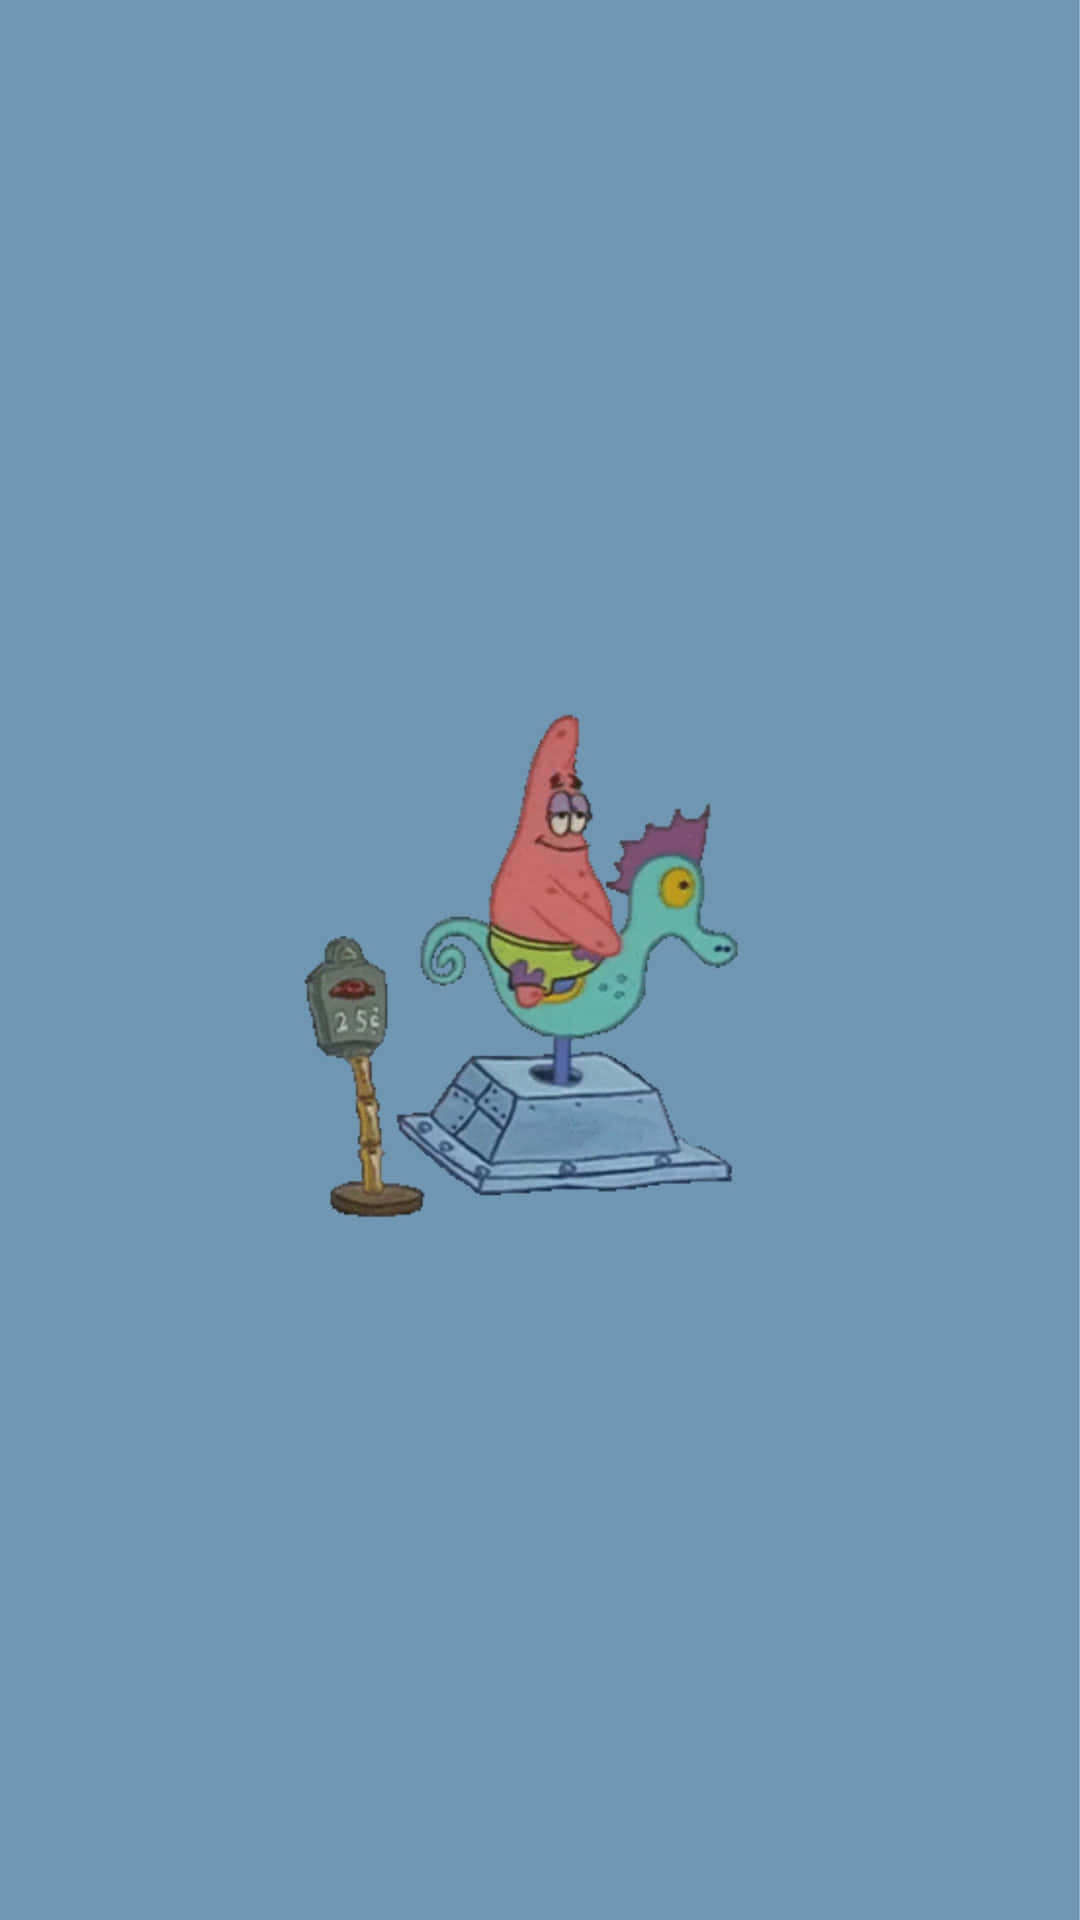 Spongebob Squarepants On A Boat Background